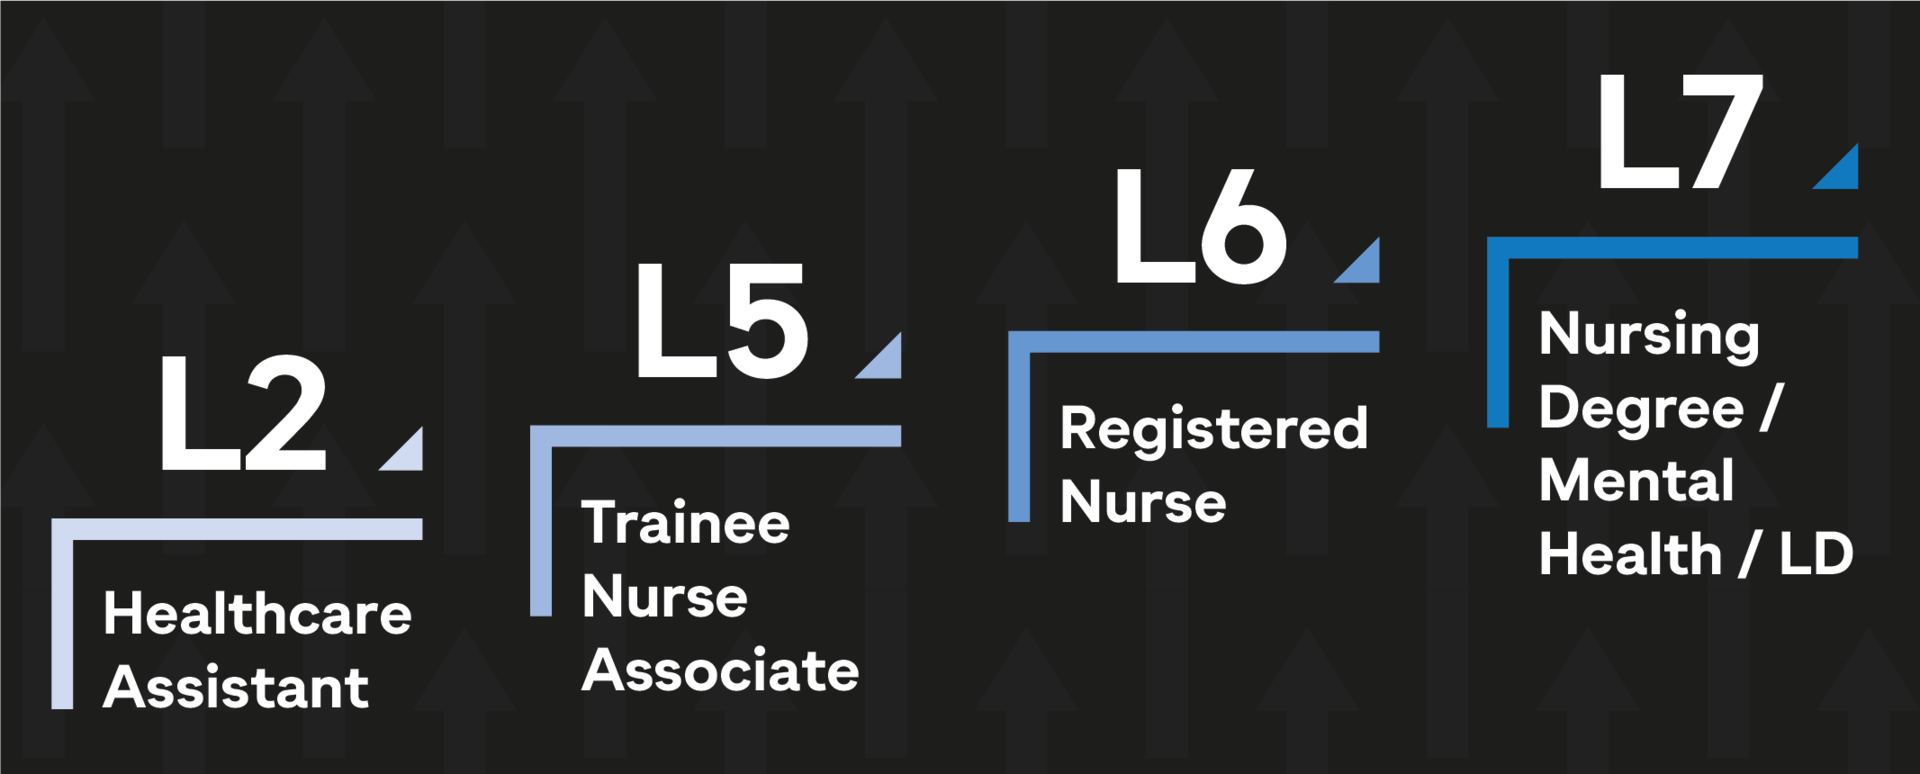 Level 2 healthcare assistant - level 5 trainee nurse associate - level 6 registered nurse - level 7 nursing degree / mental health / LD